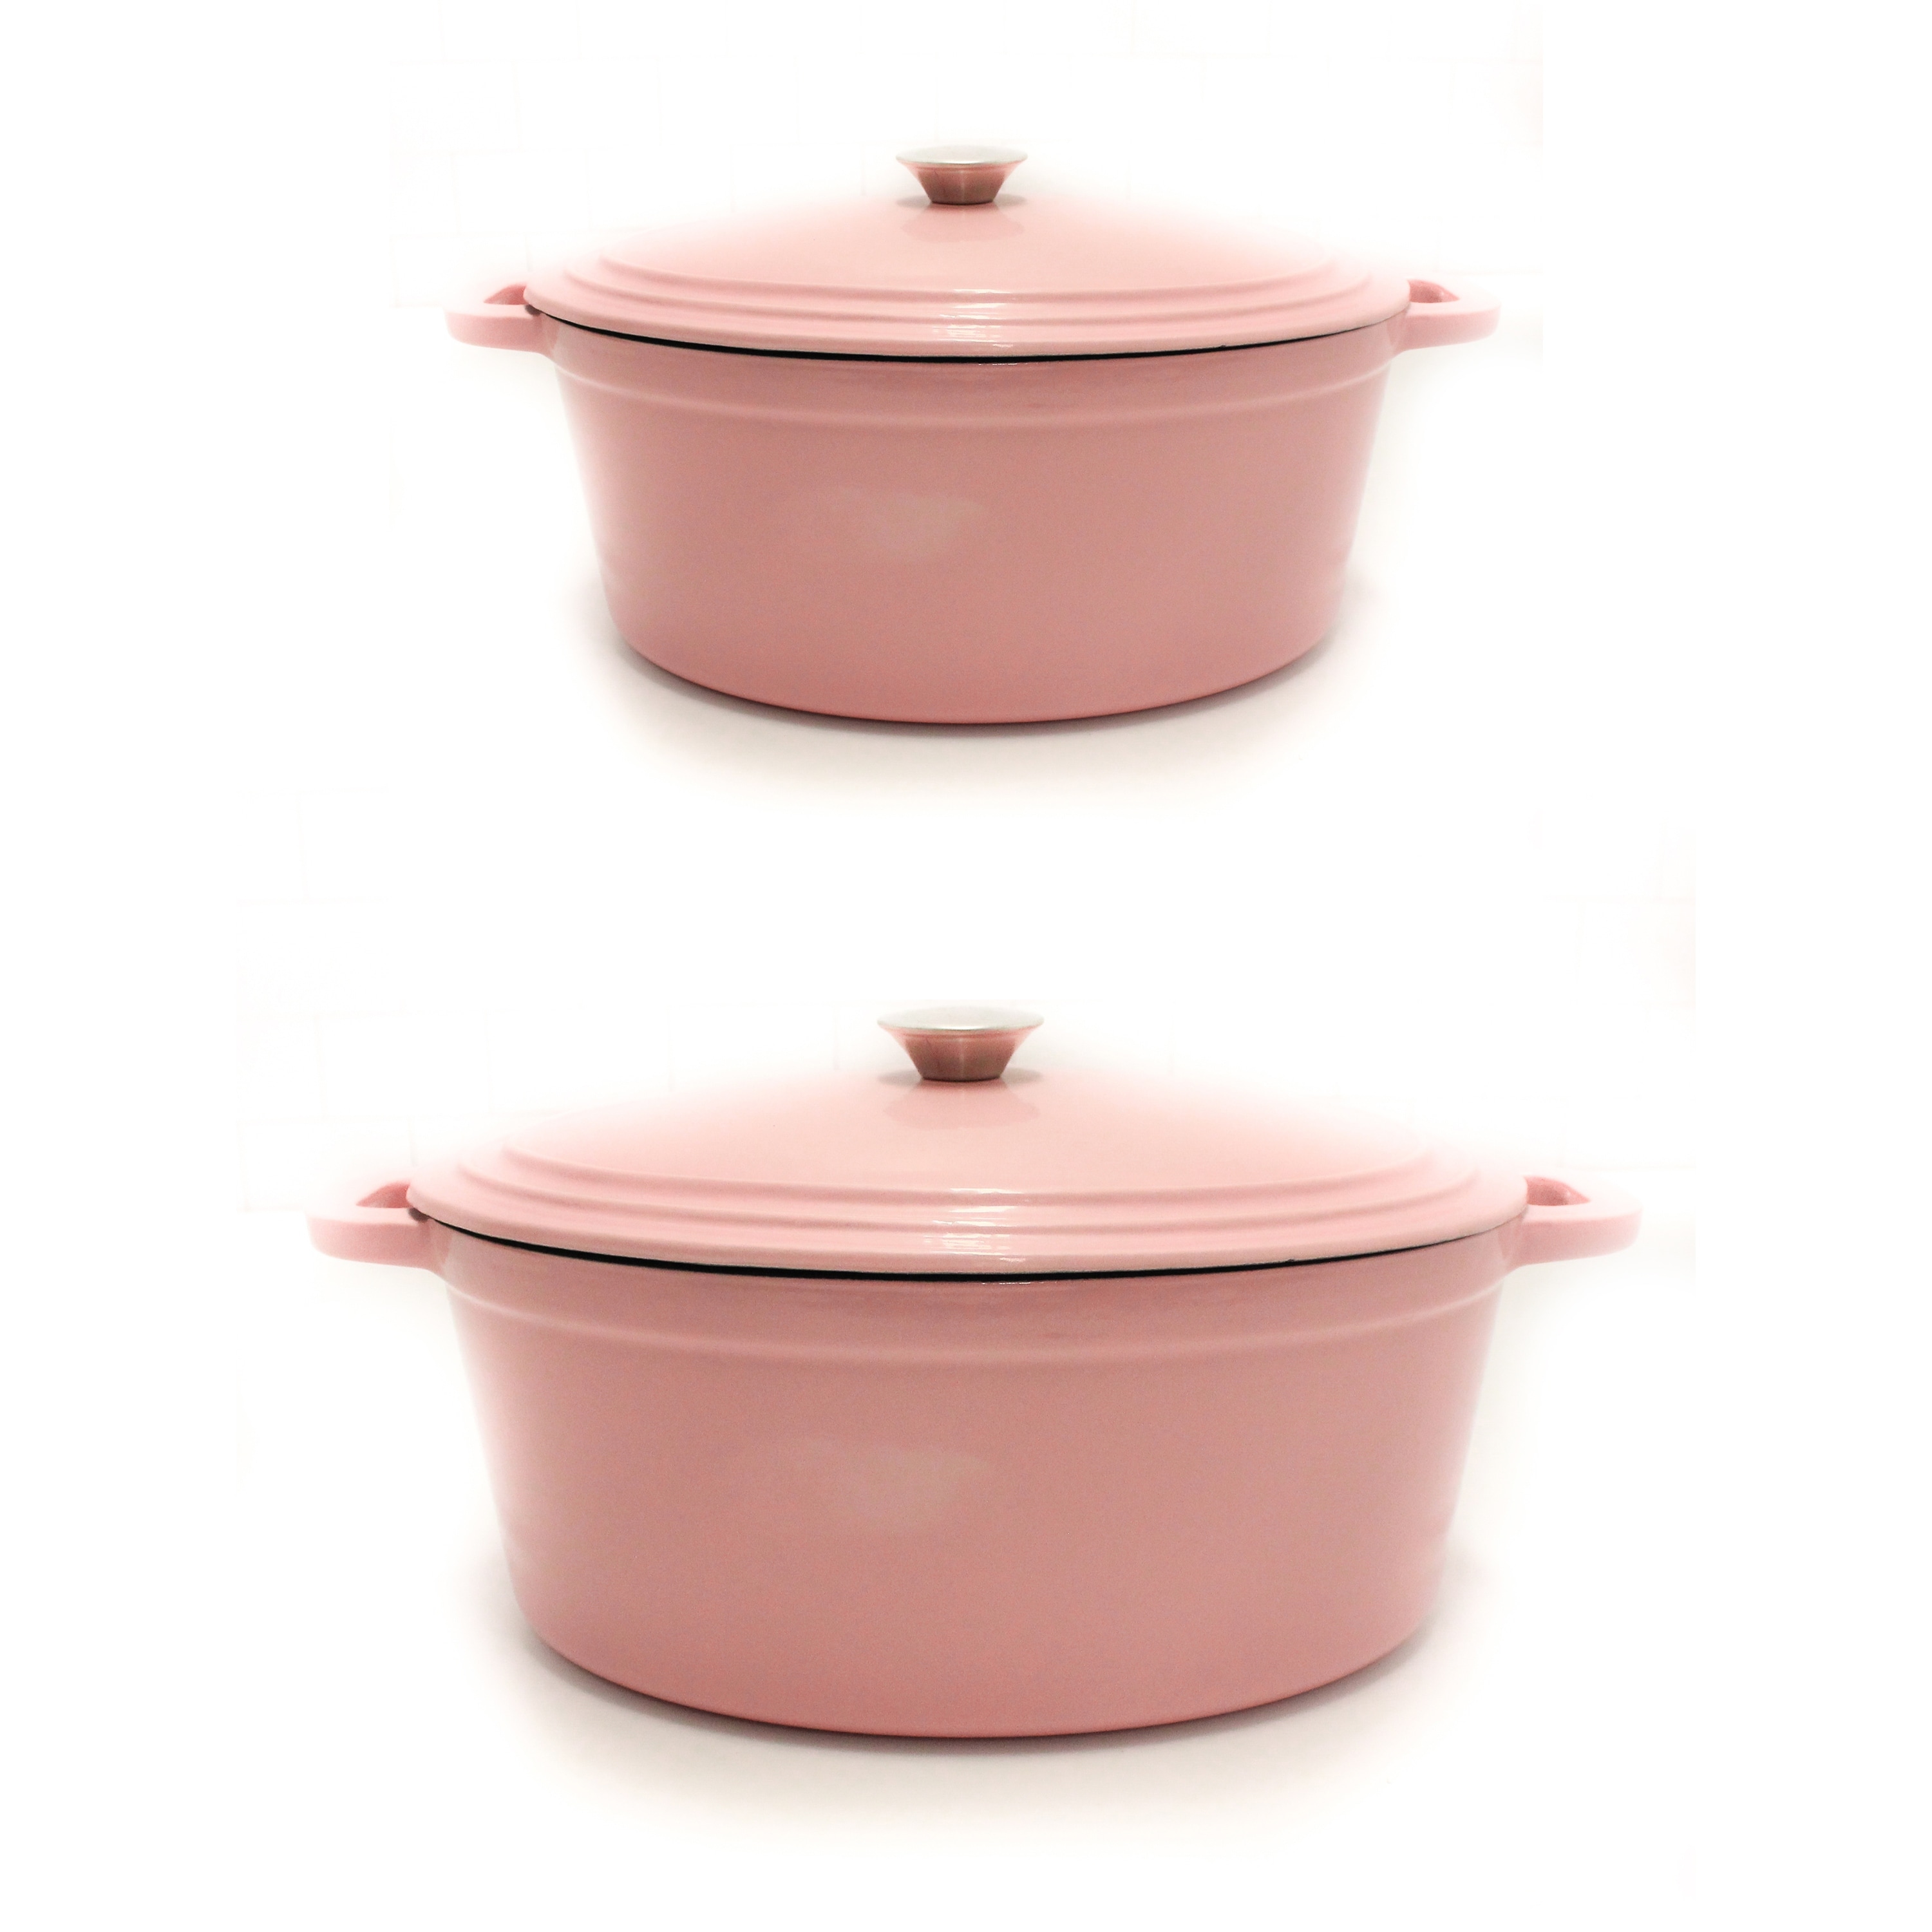 BergHOFF Pink Neo 5Pc Cast Iron Cookware Set, Pink